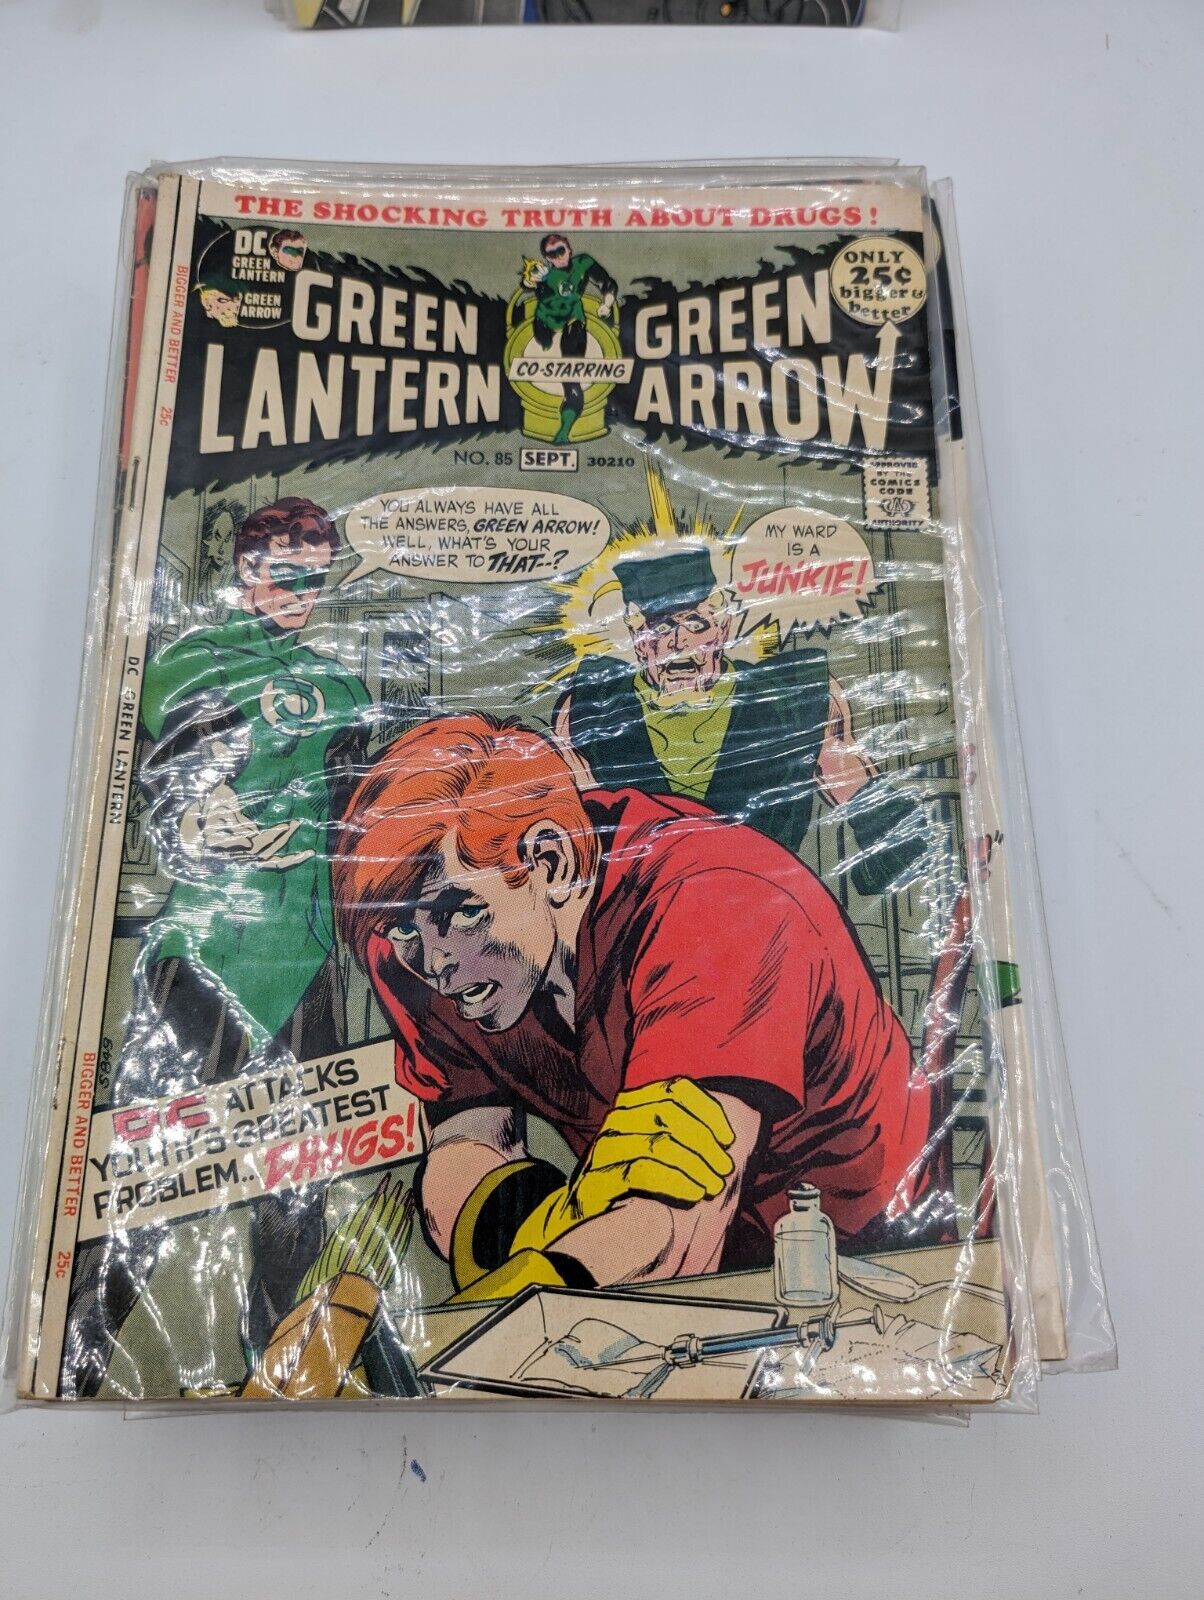 1971 DC Comics Green Lantern Green Arrow #85 - Neal Adams Drug Issue